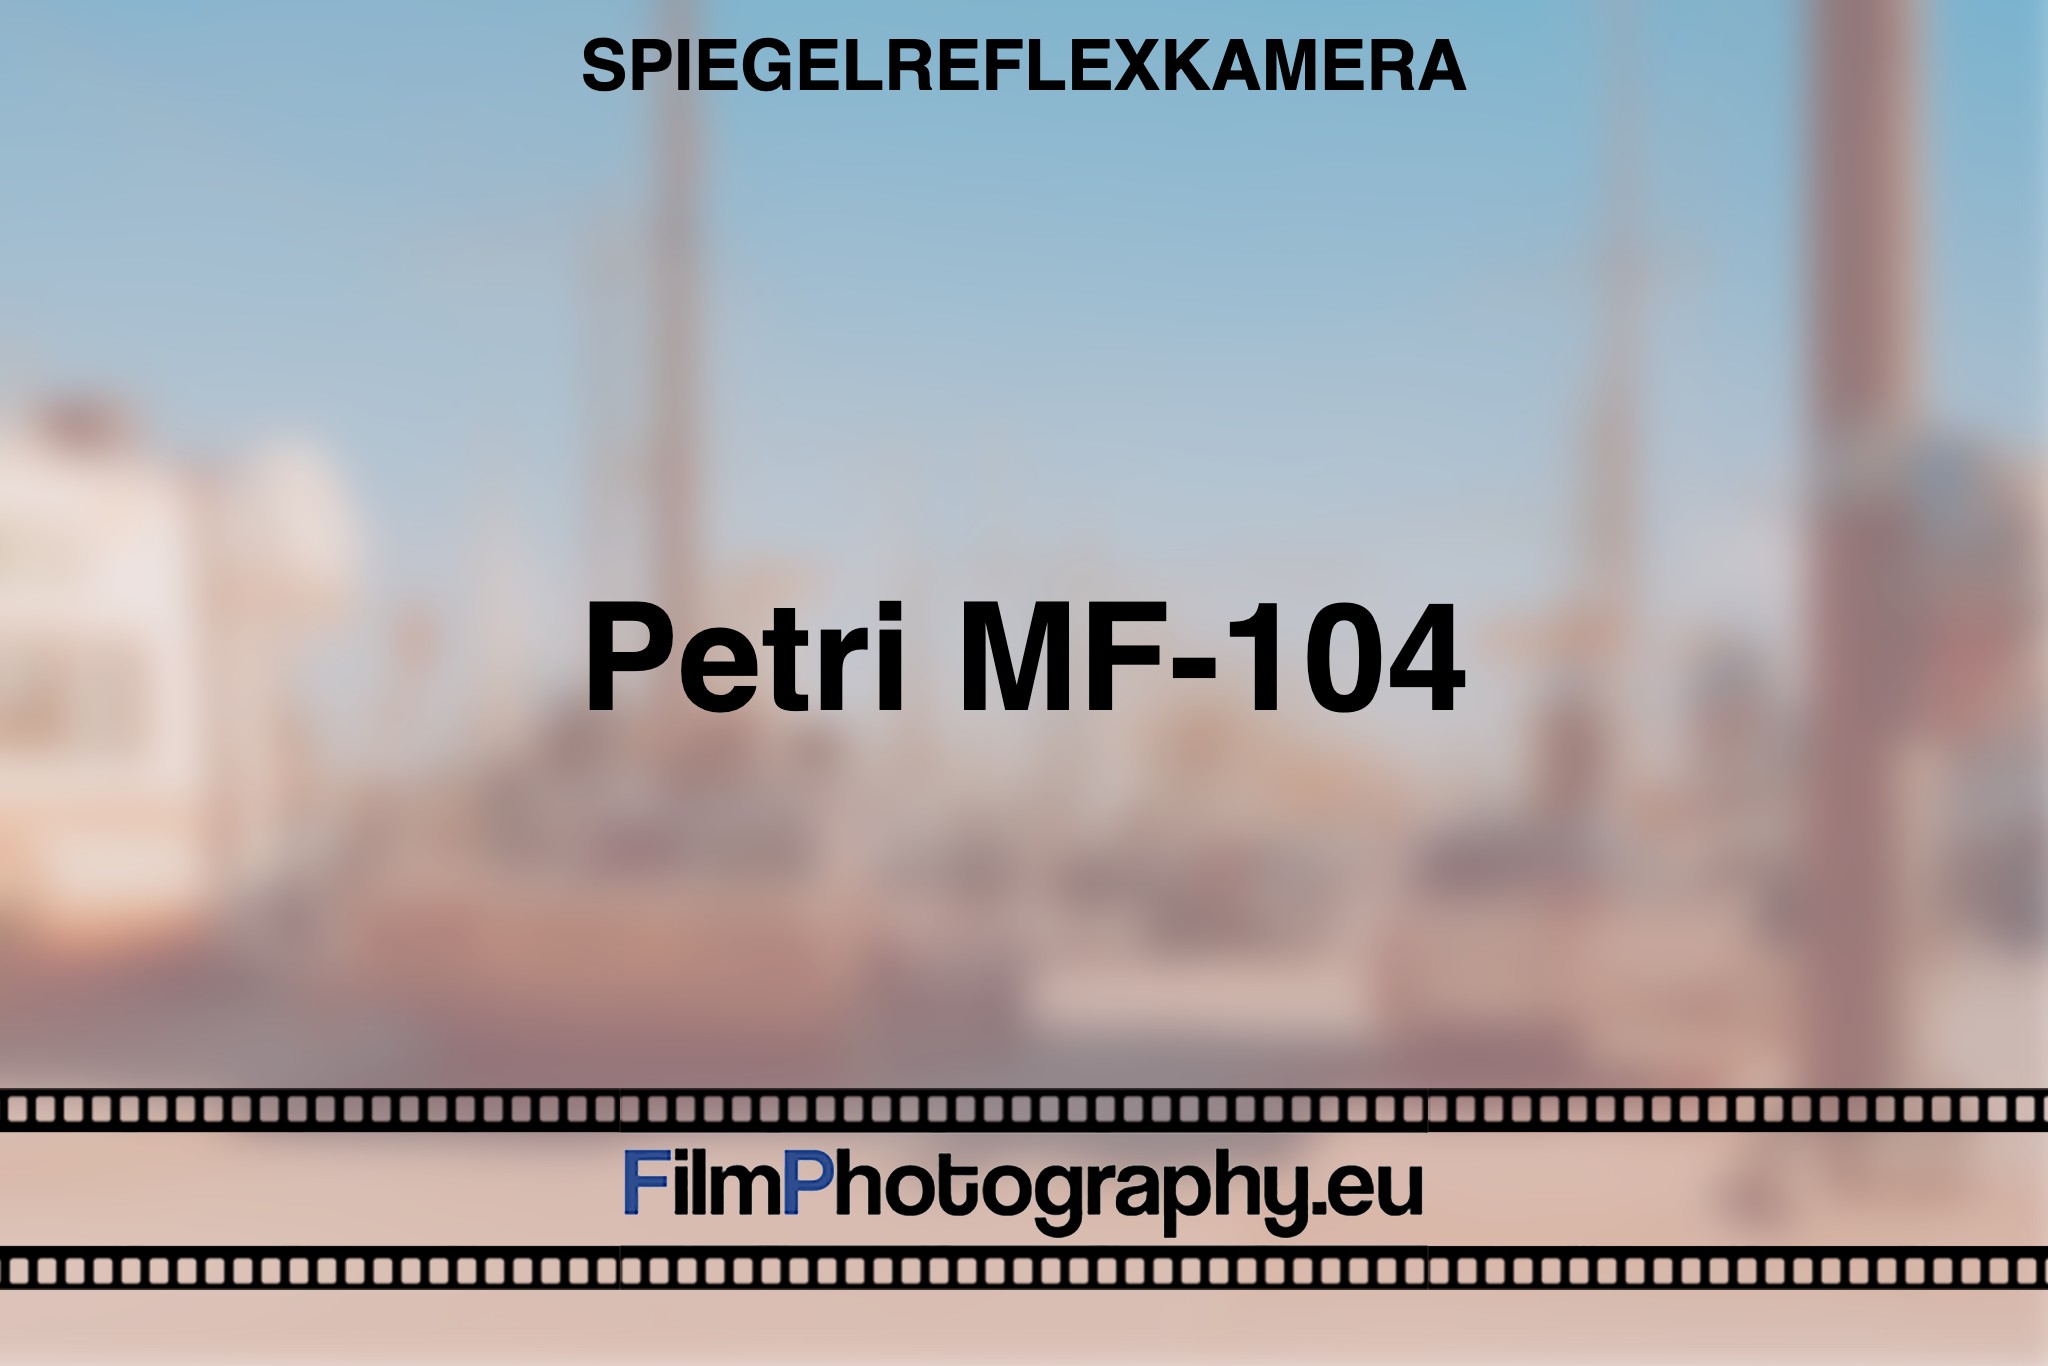 petri-mf-104-spiegelreflexkamera-bnv